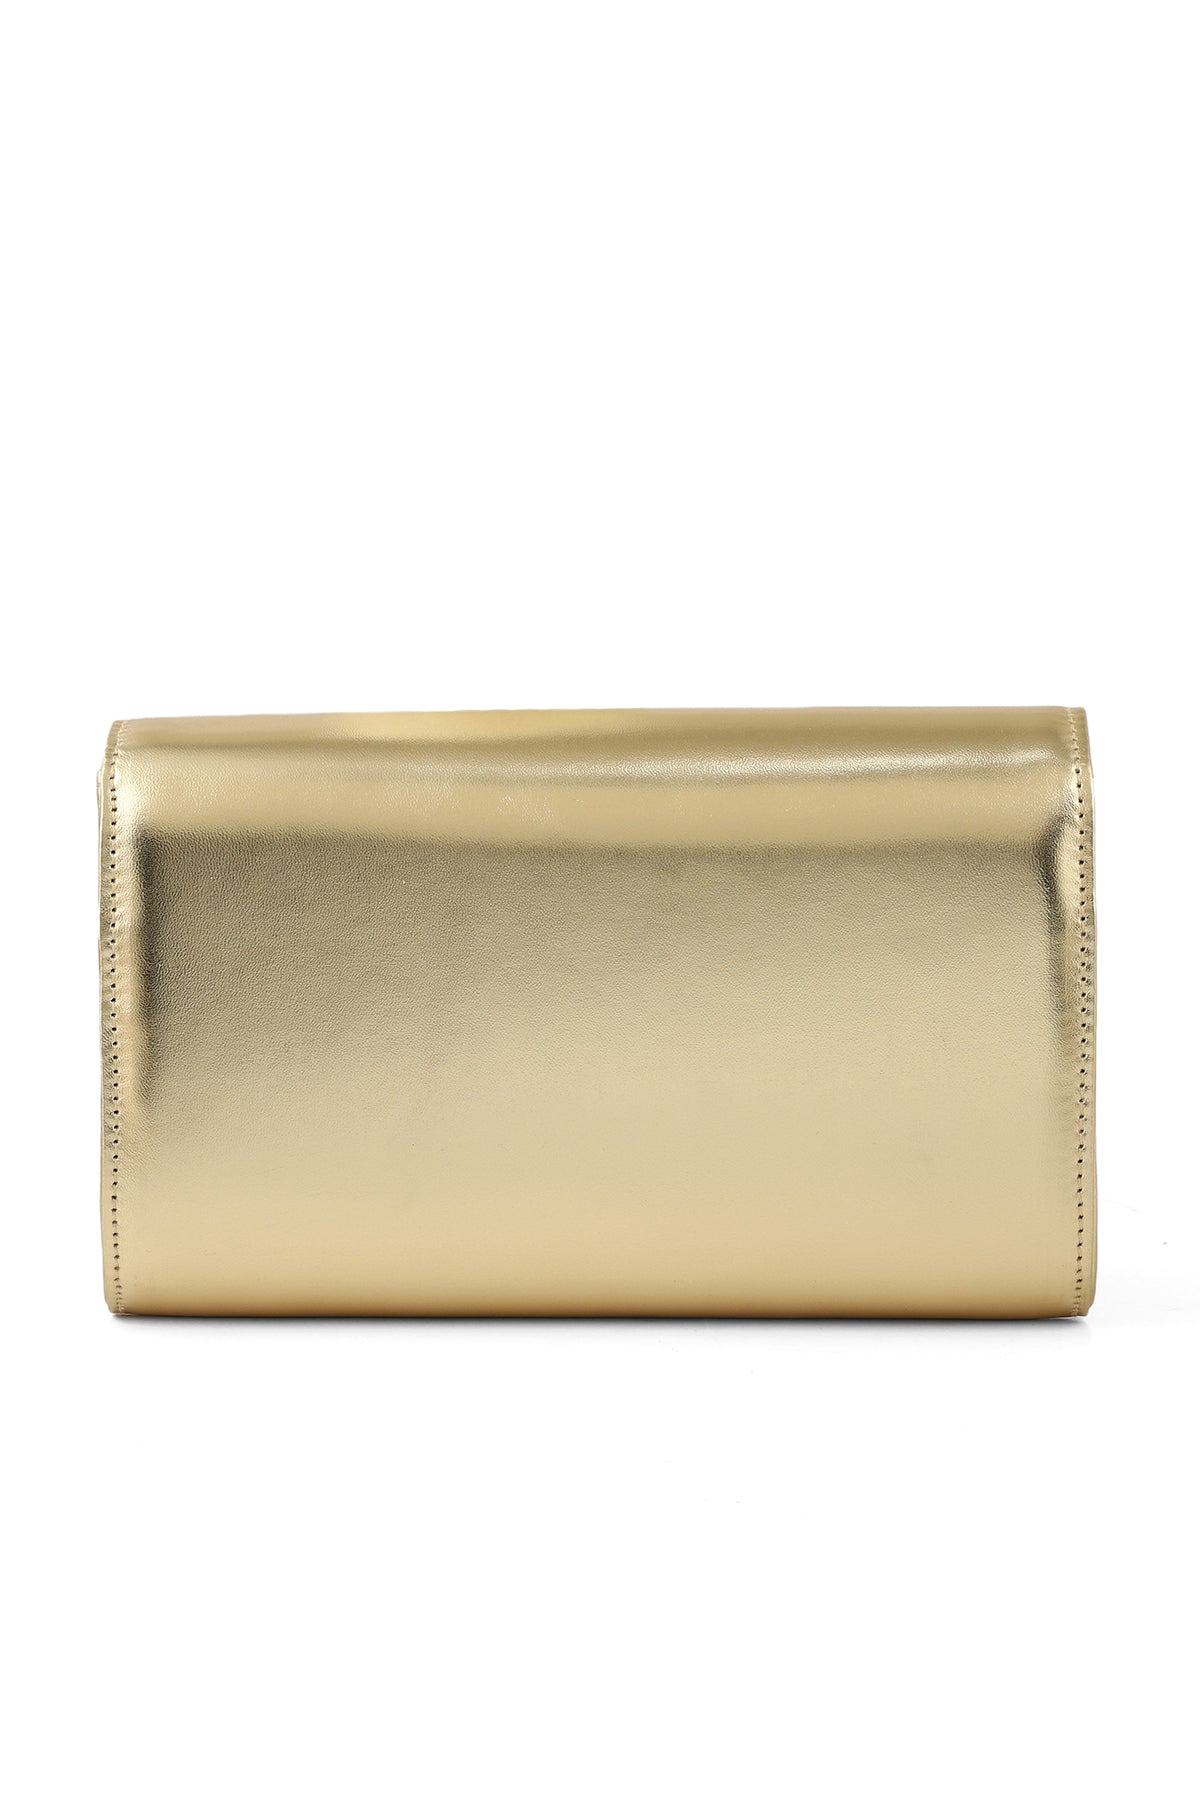 Flap Shoulder Bags B20745-Golden